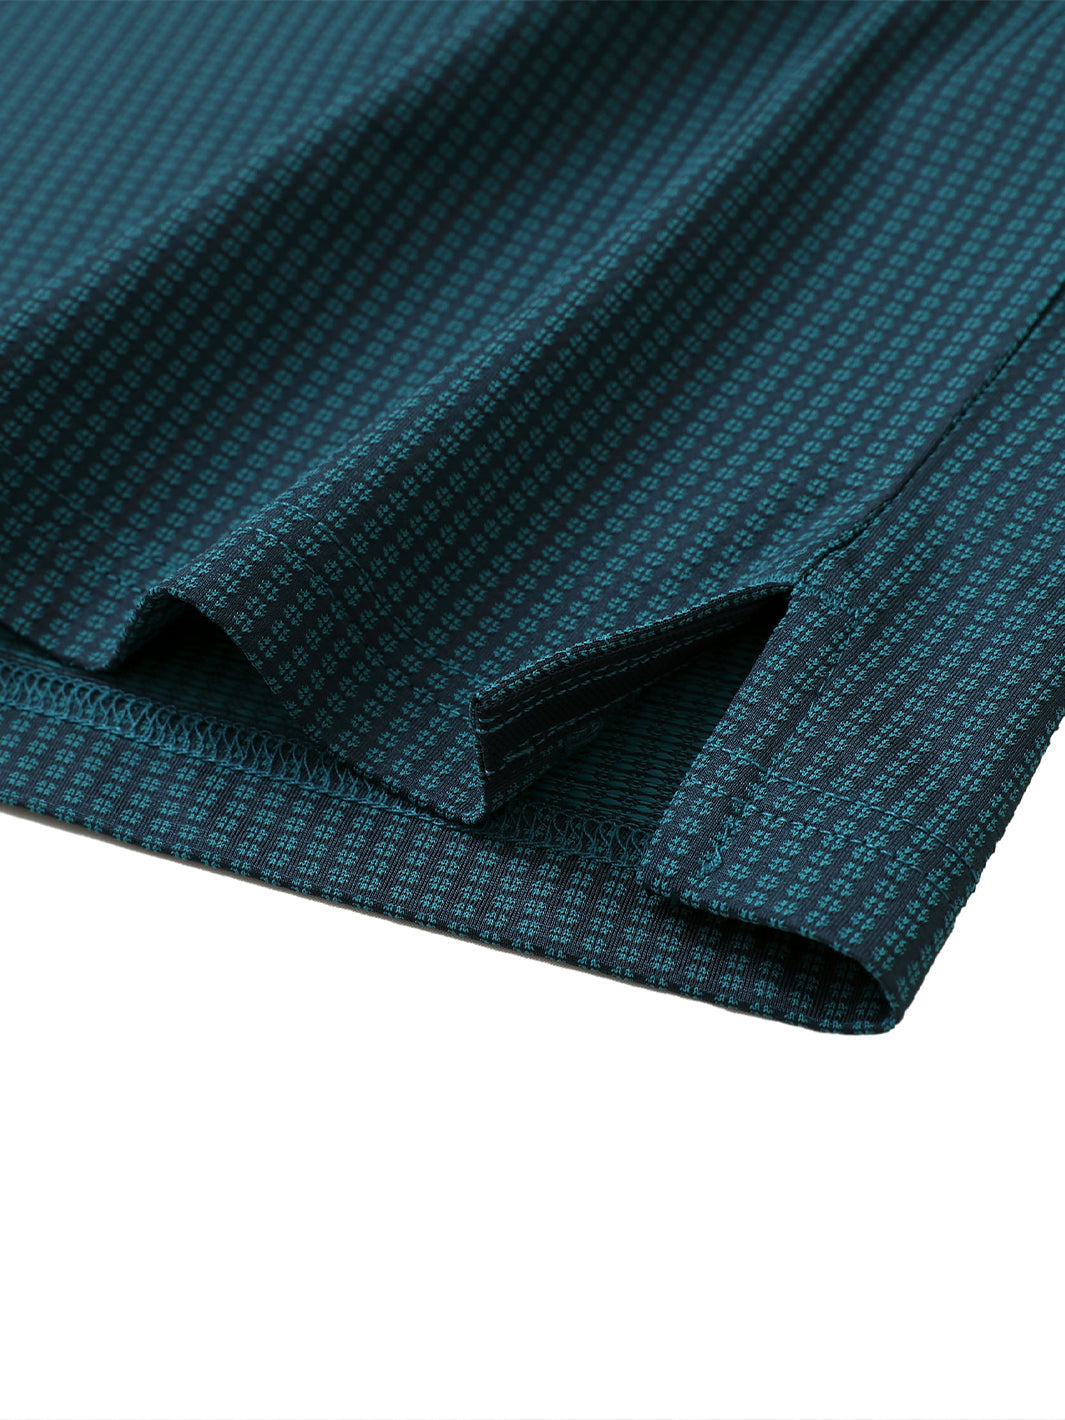 Men's Dry Fit Jacquard Pocket Golf Shirts-Turquoise